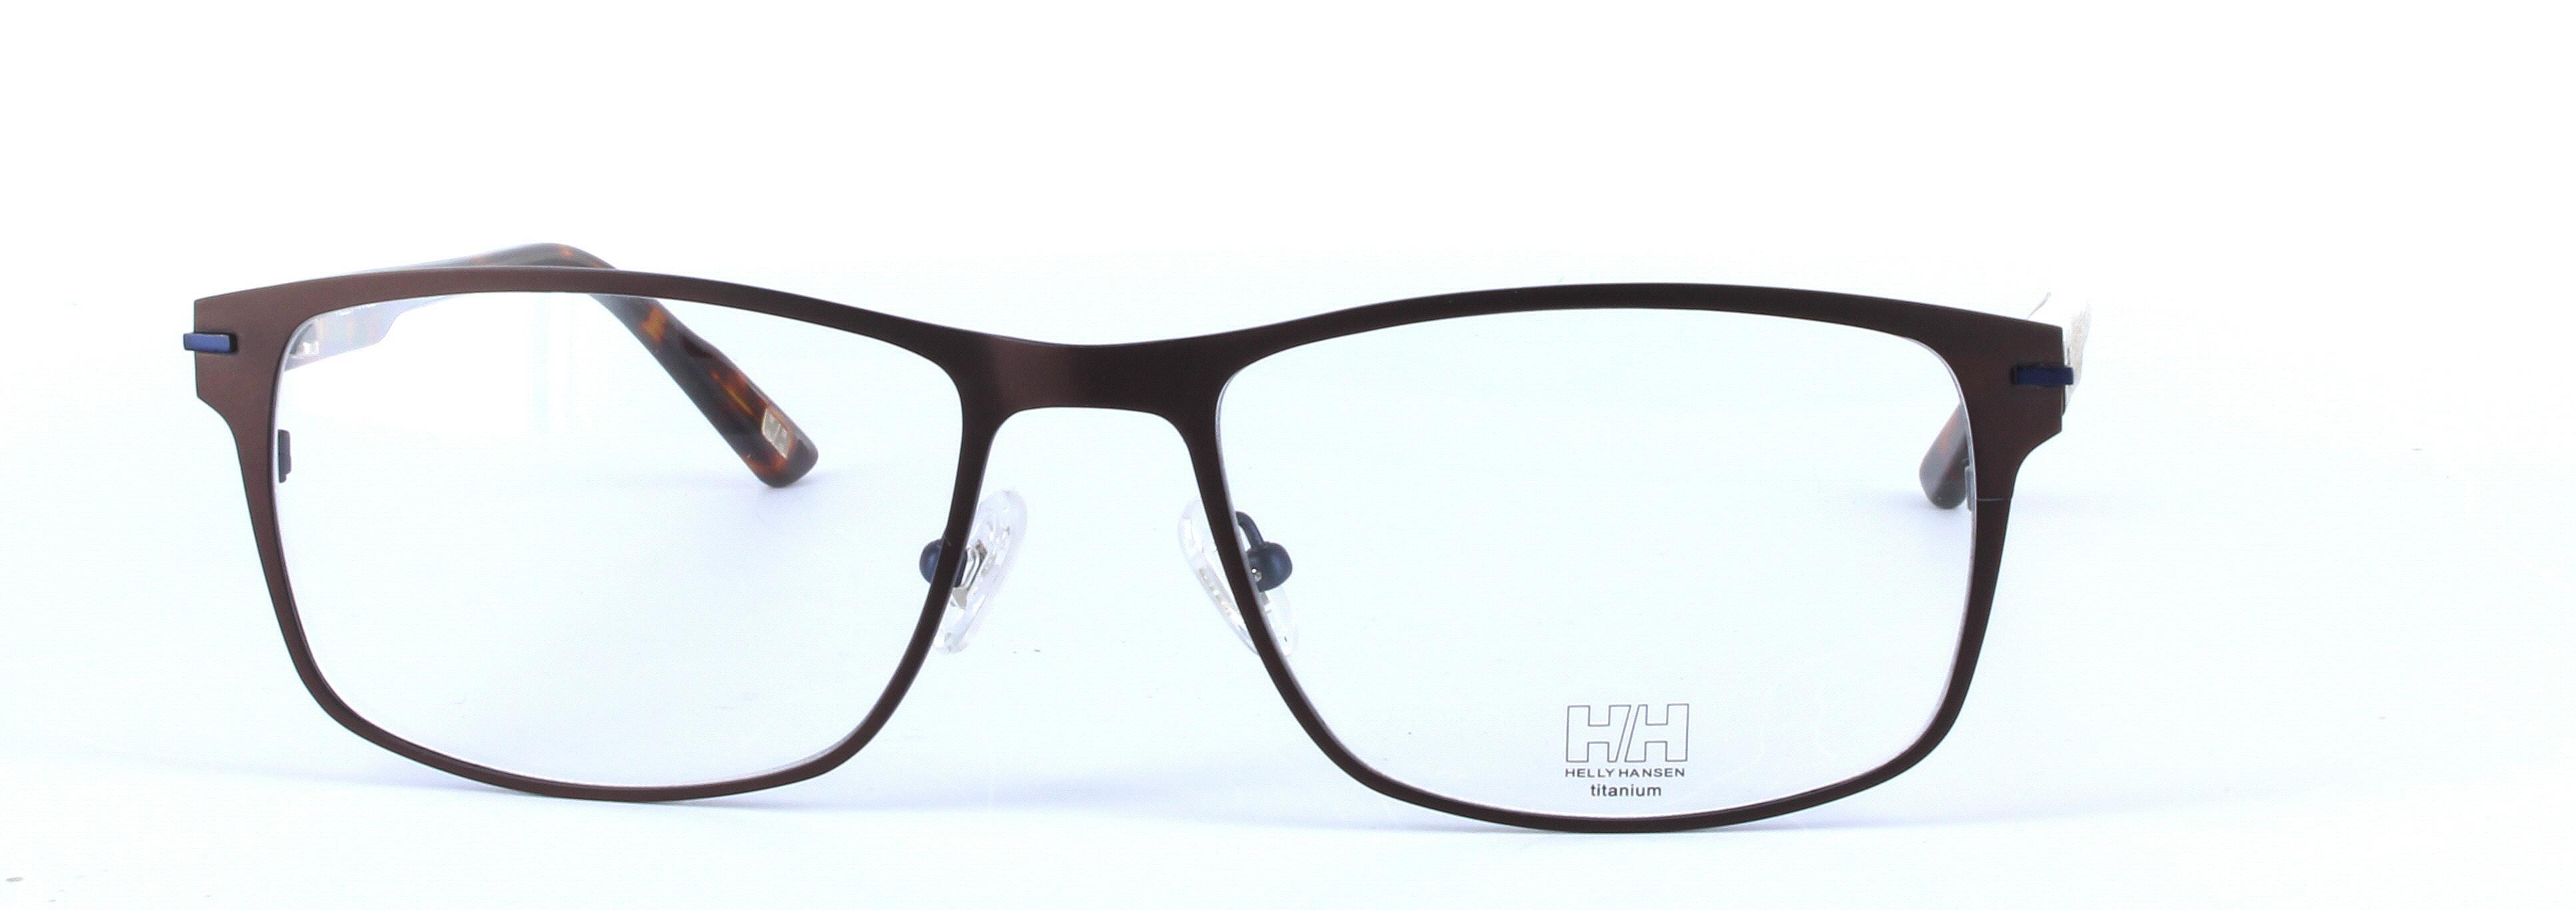 Helly Hansen HH 1019 Brown Full Rim Rectangular Square Metal Glasses - Image View 5